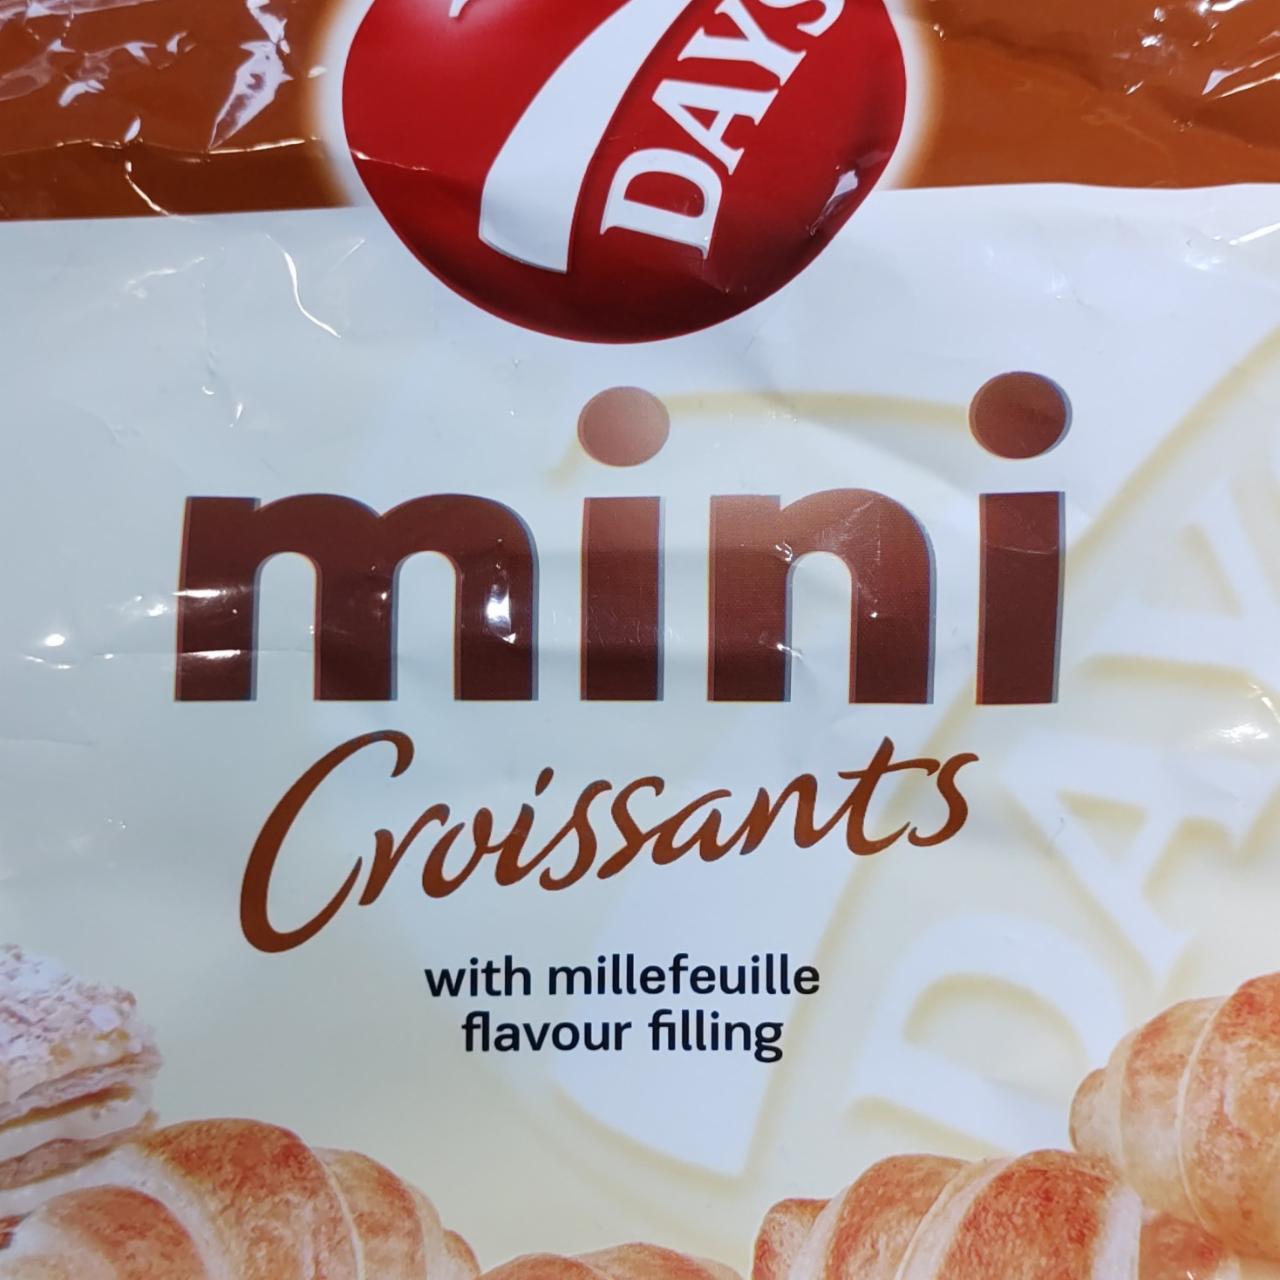 Fotografie - Mini Croissants with millefeuille flavour filling 7 Days